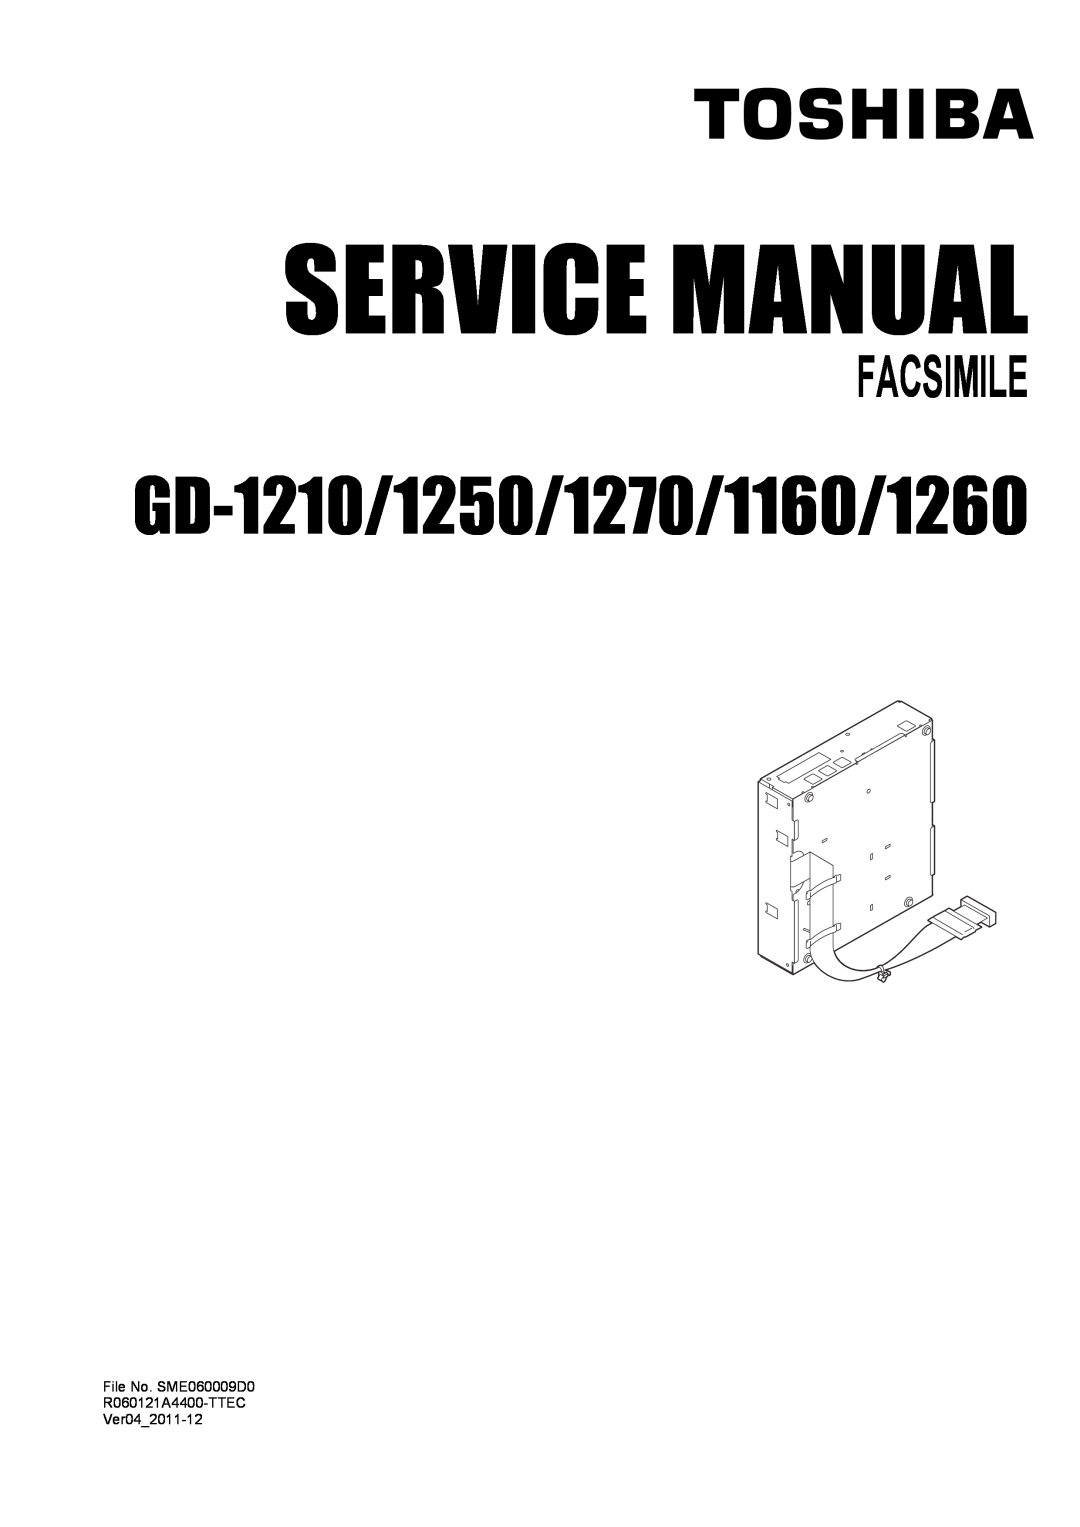 Toshiba GD-1250, GD-1260, GD-1270, GD-1160 service manual Service Manual, GD-1210/1250/1270/1160/1260, Facsimile 